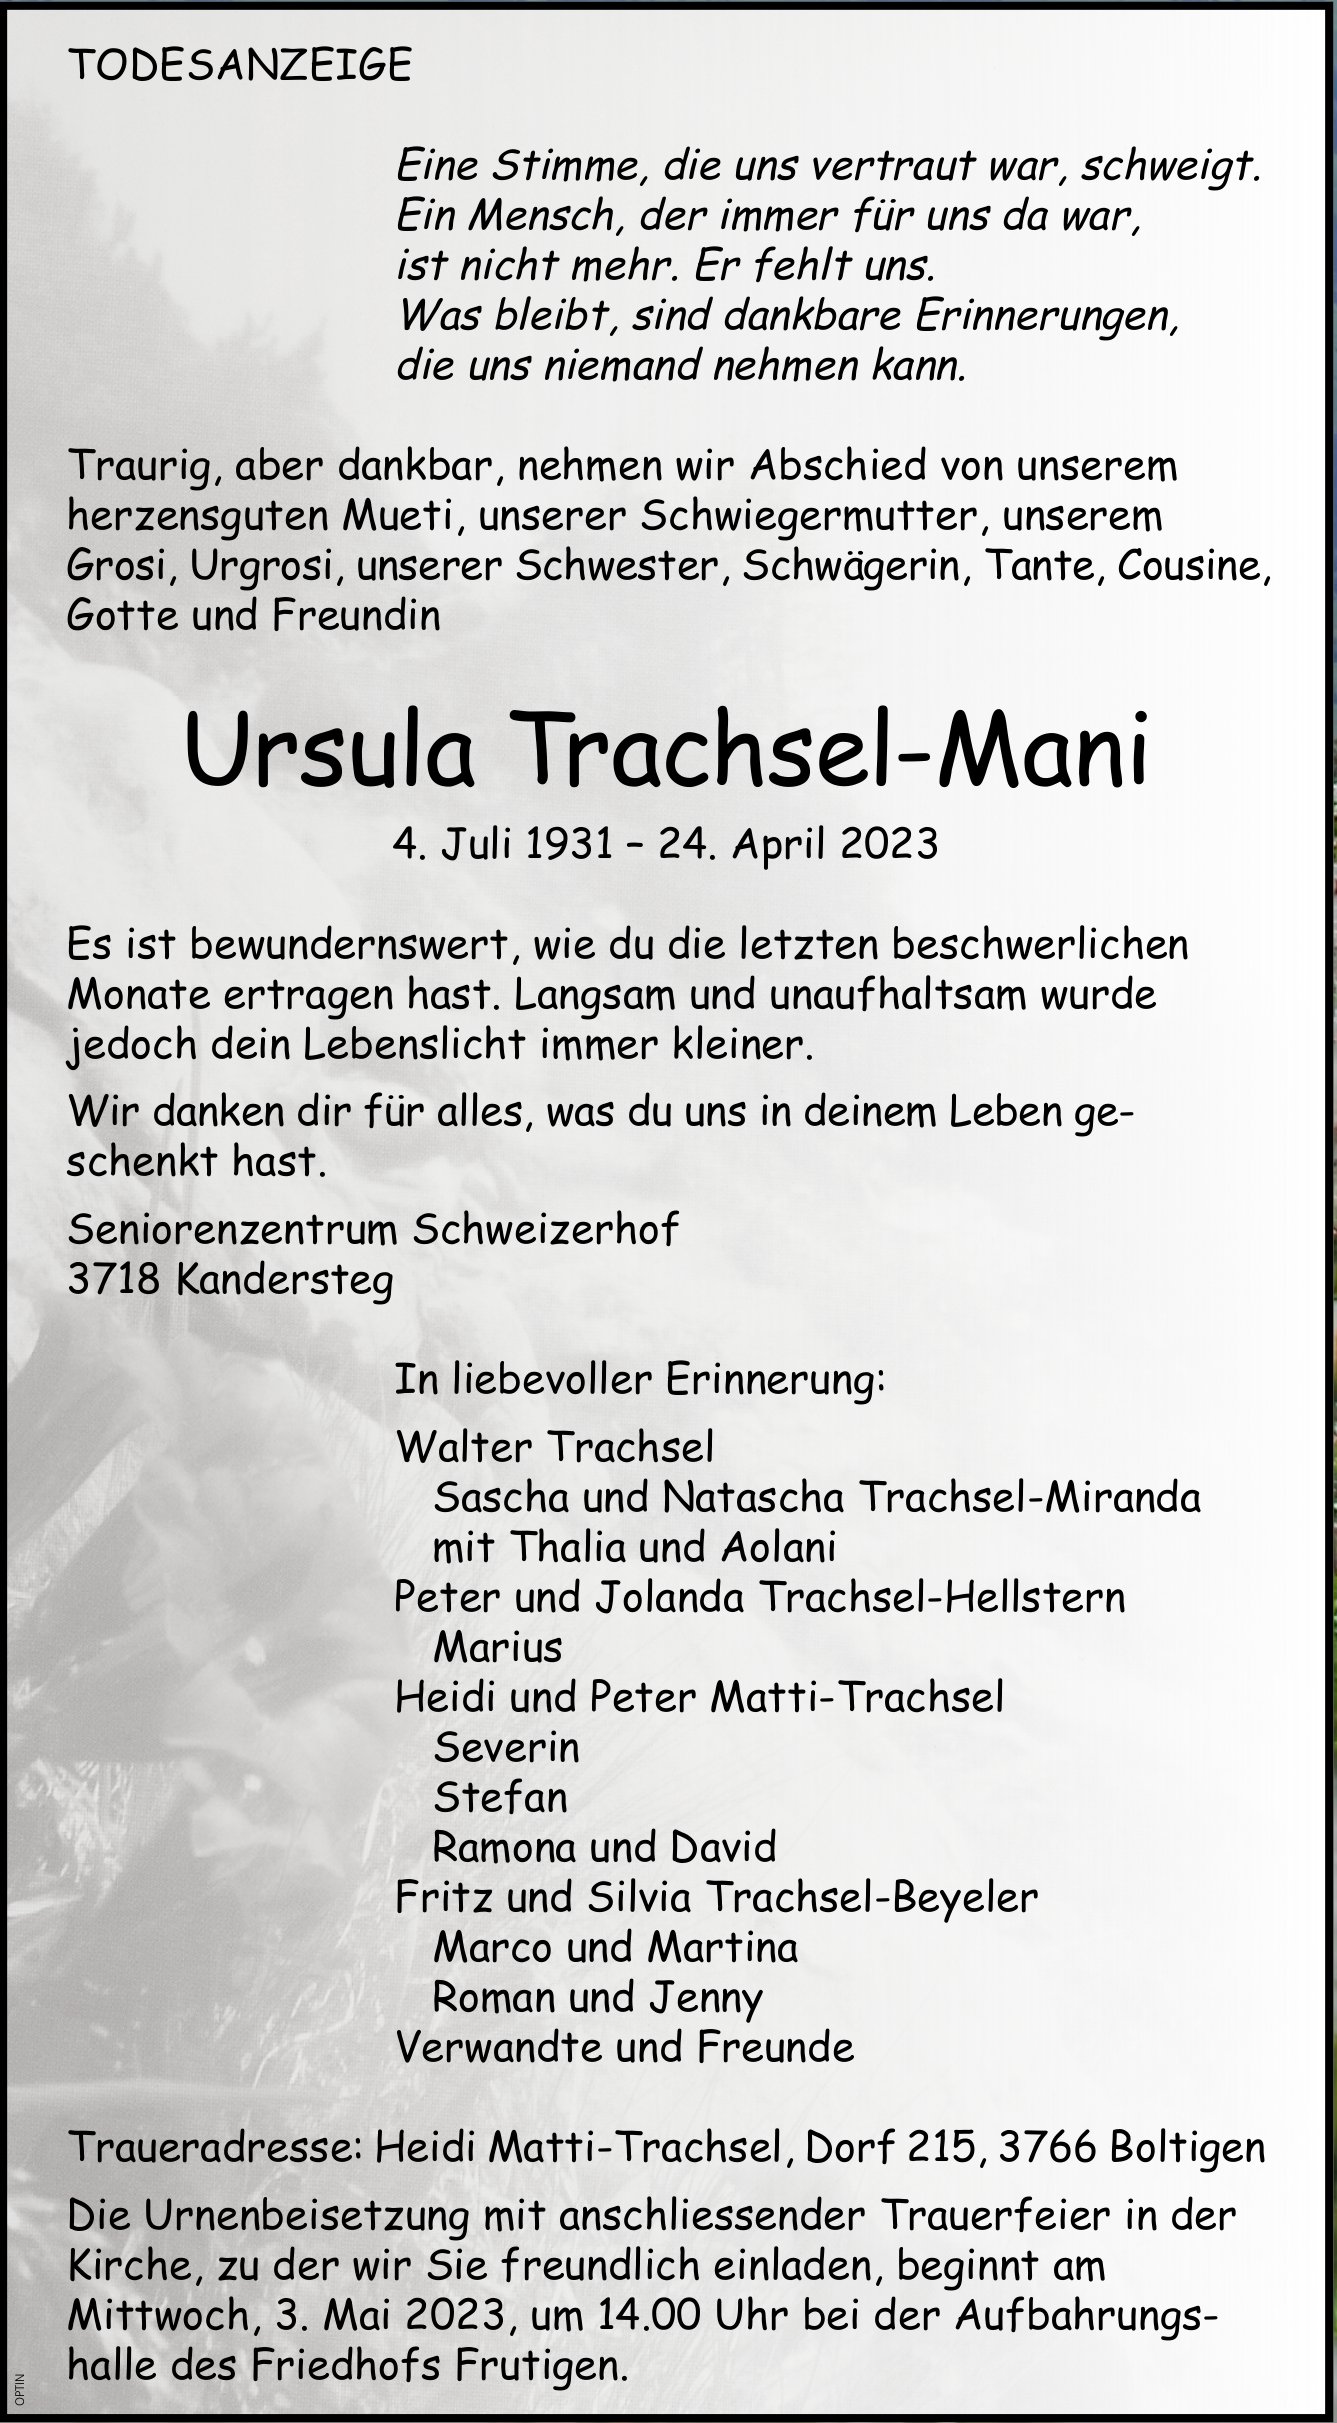 Ursula Trachsel-Mani, April 2023 / TA